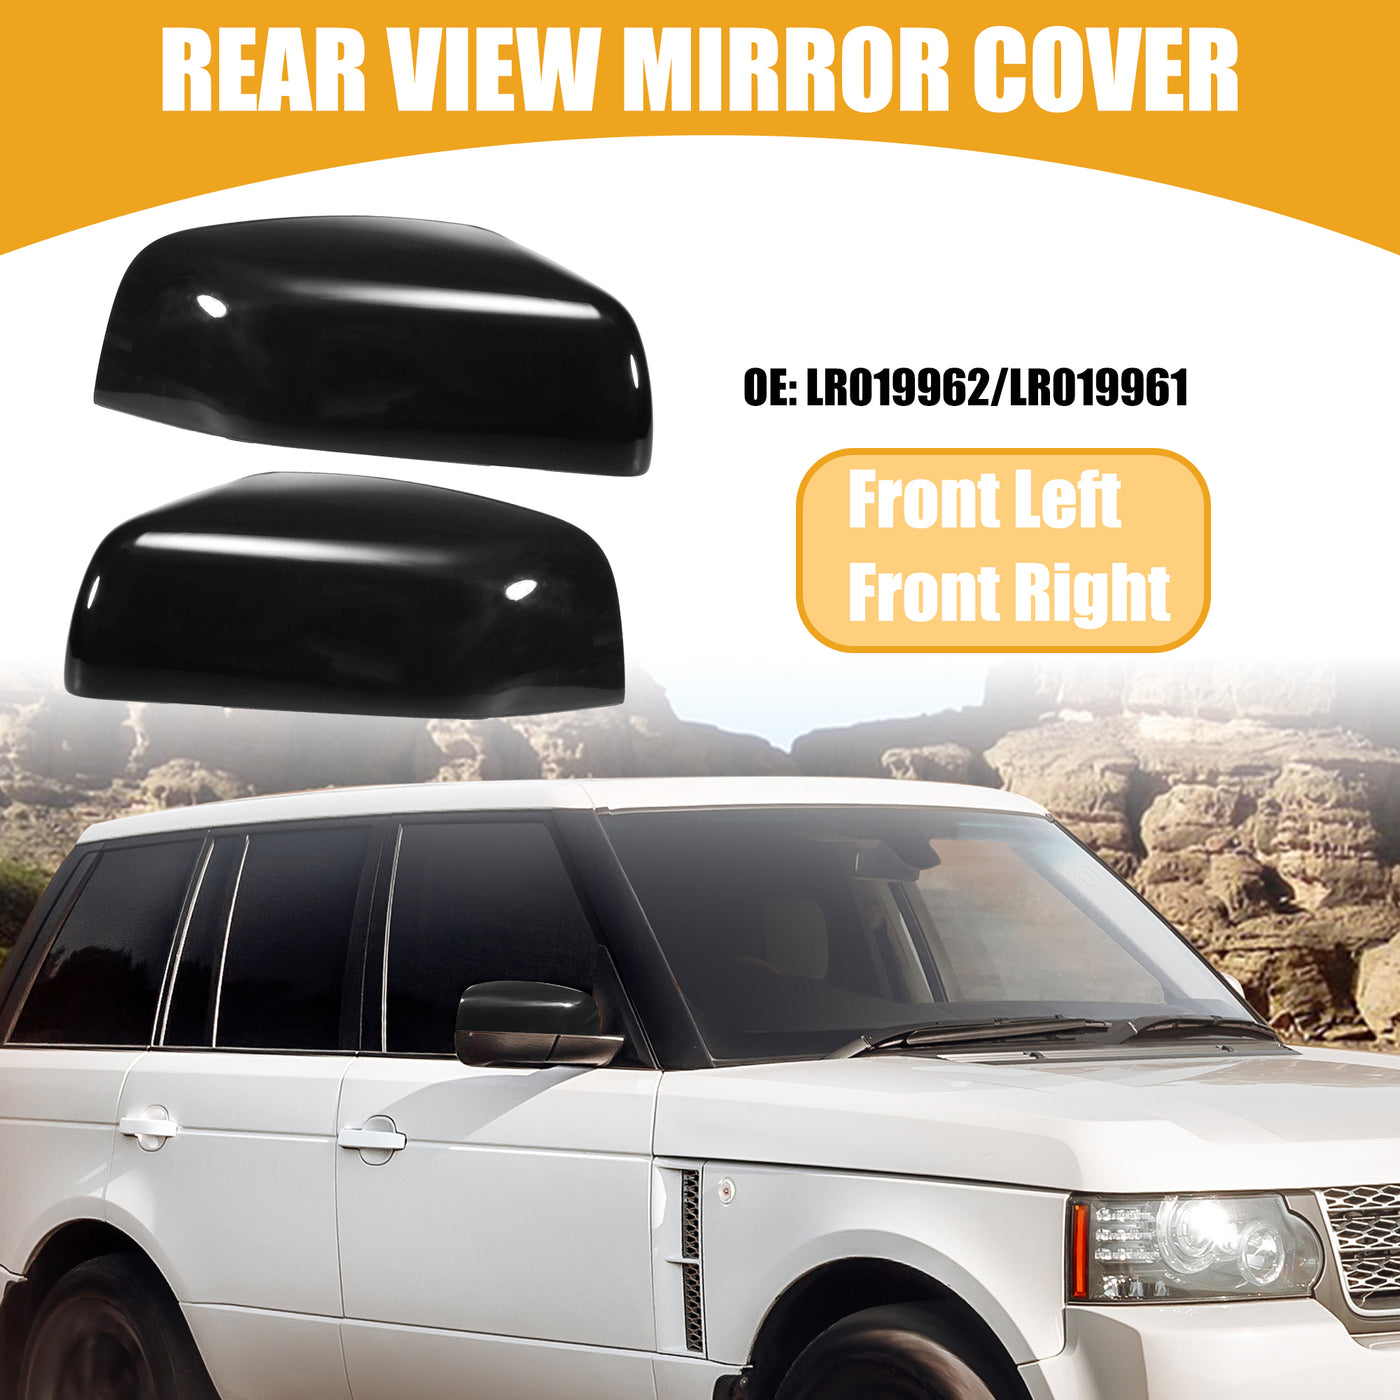 Partuto Rear View Mirror Cover No.LR019962/LR019961 - Car Front Left Right Side Door Mirror Cover Cap - for Land Rover LR2 2011 2012 Plastic Black - 1 Pair